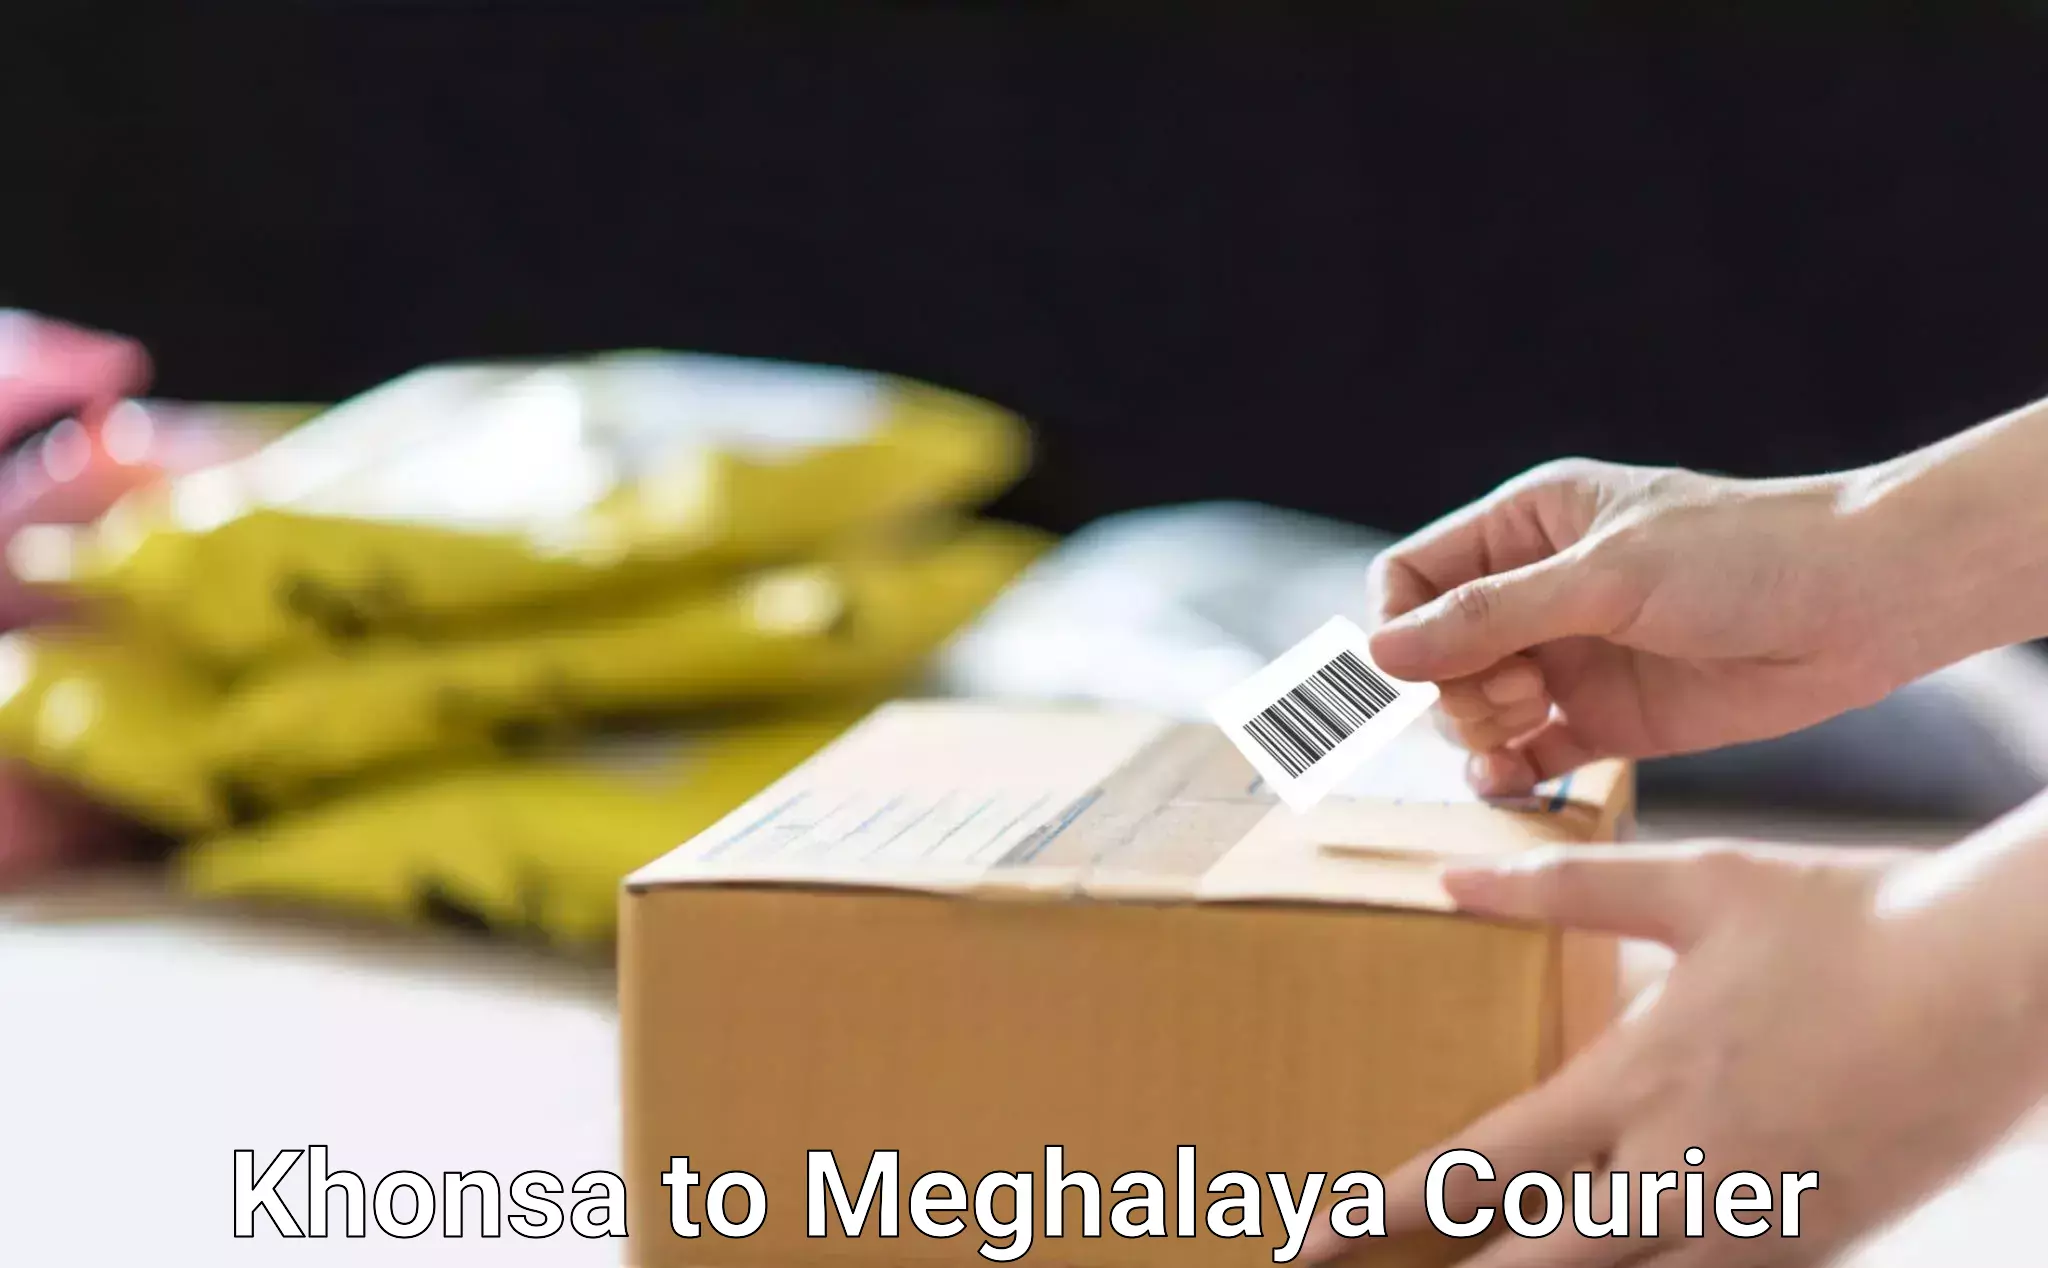 Easy return solutions Khonsa to Meghalaya